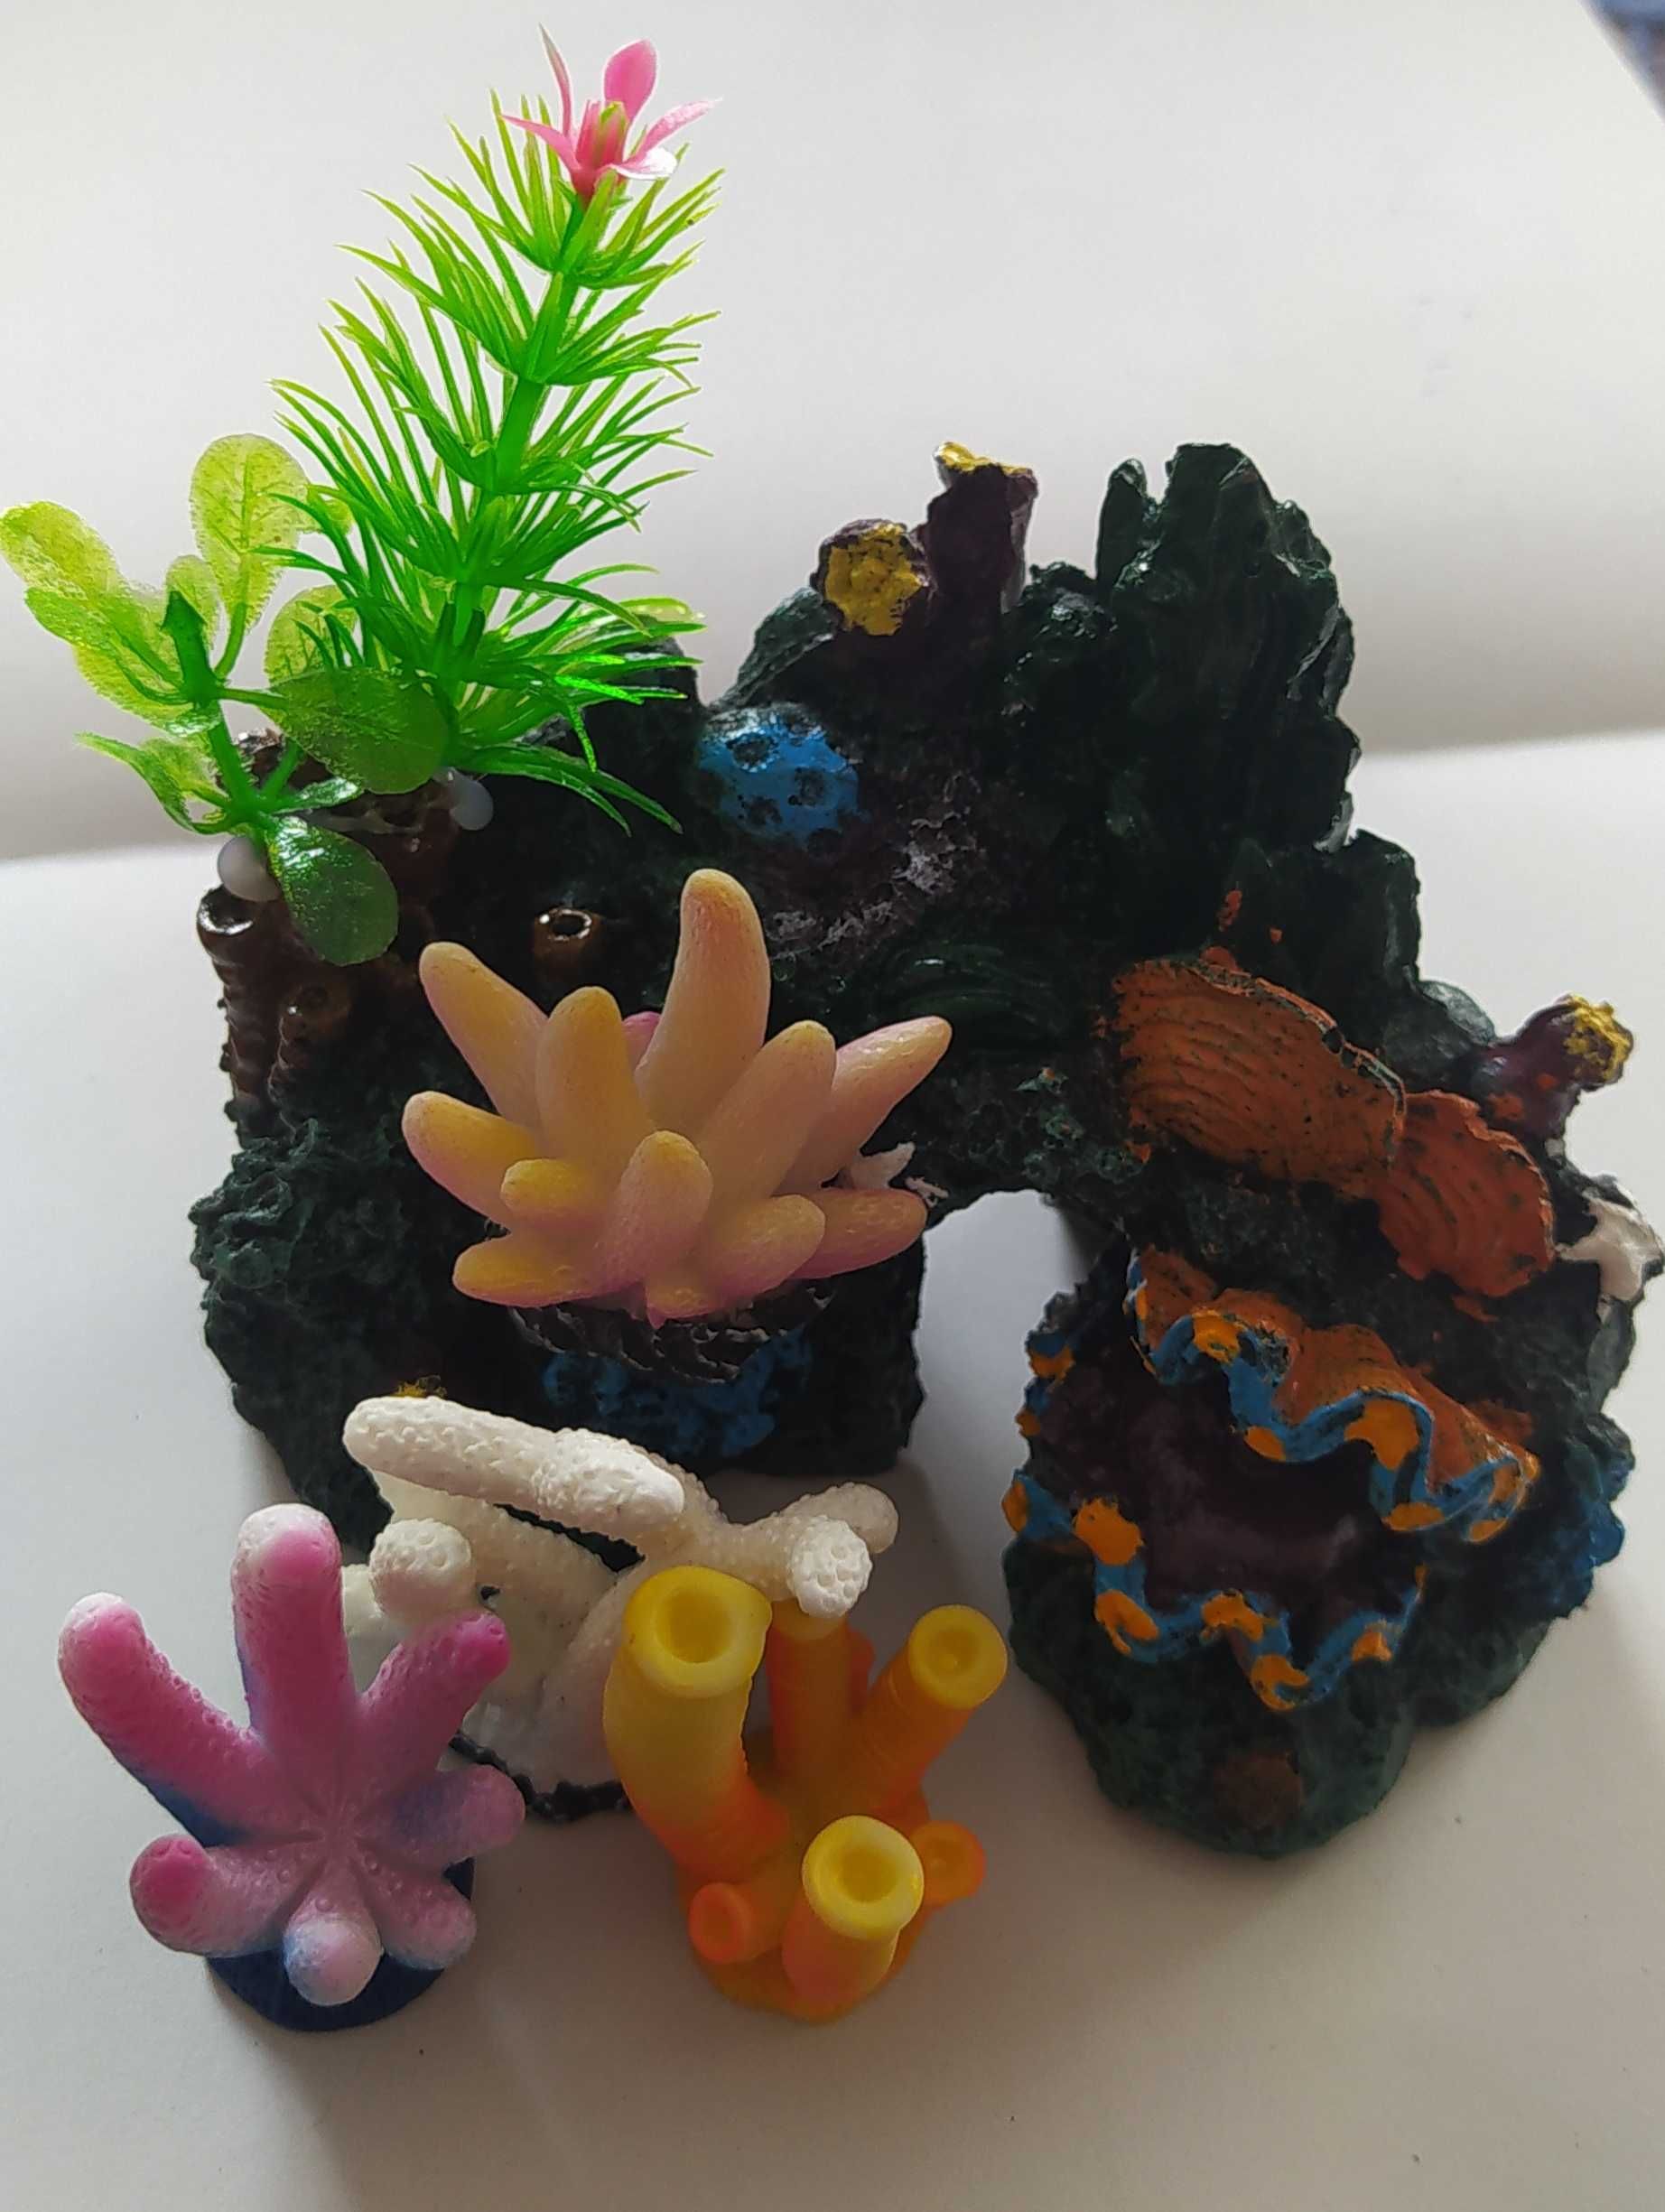 Ozdoba  do akwarium  rafa koralowa